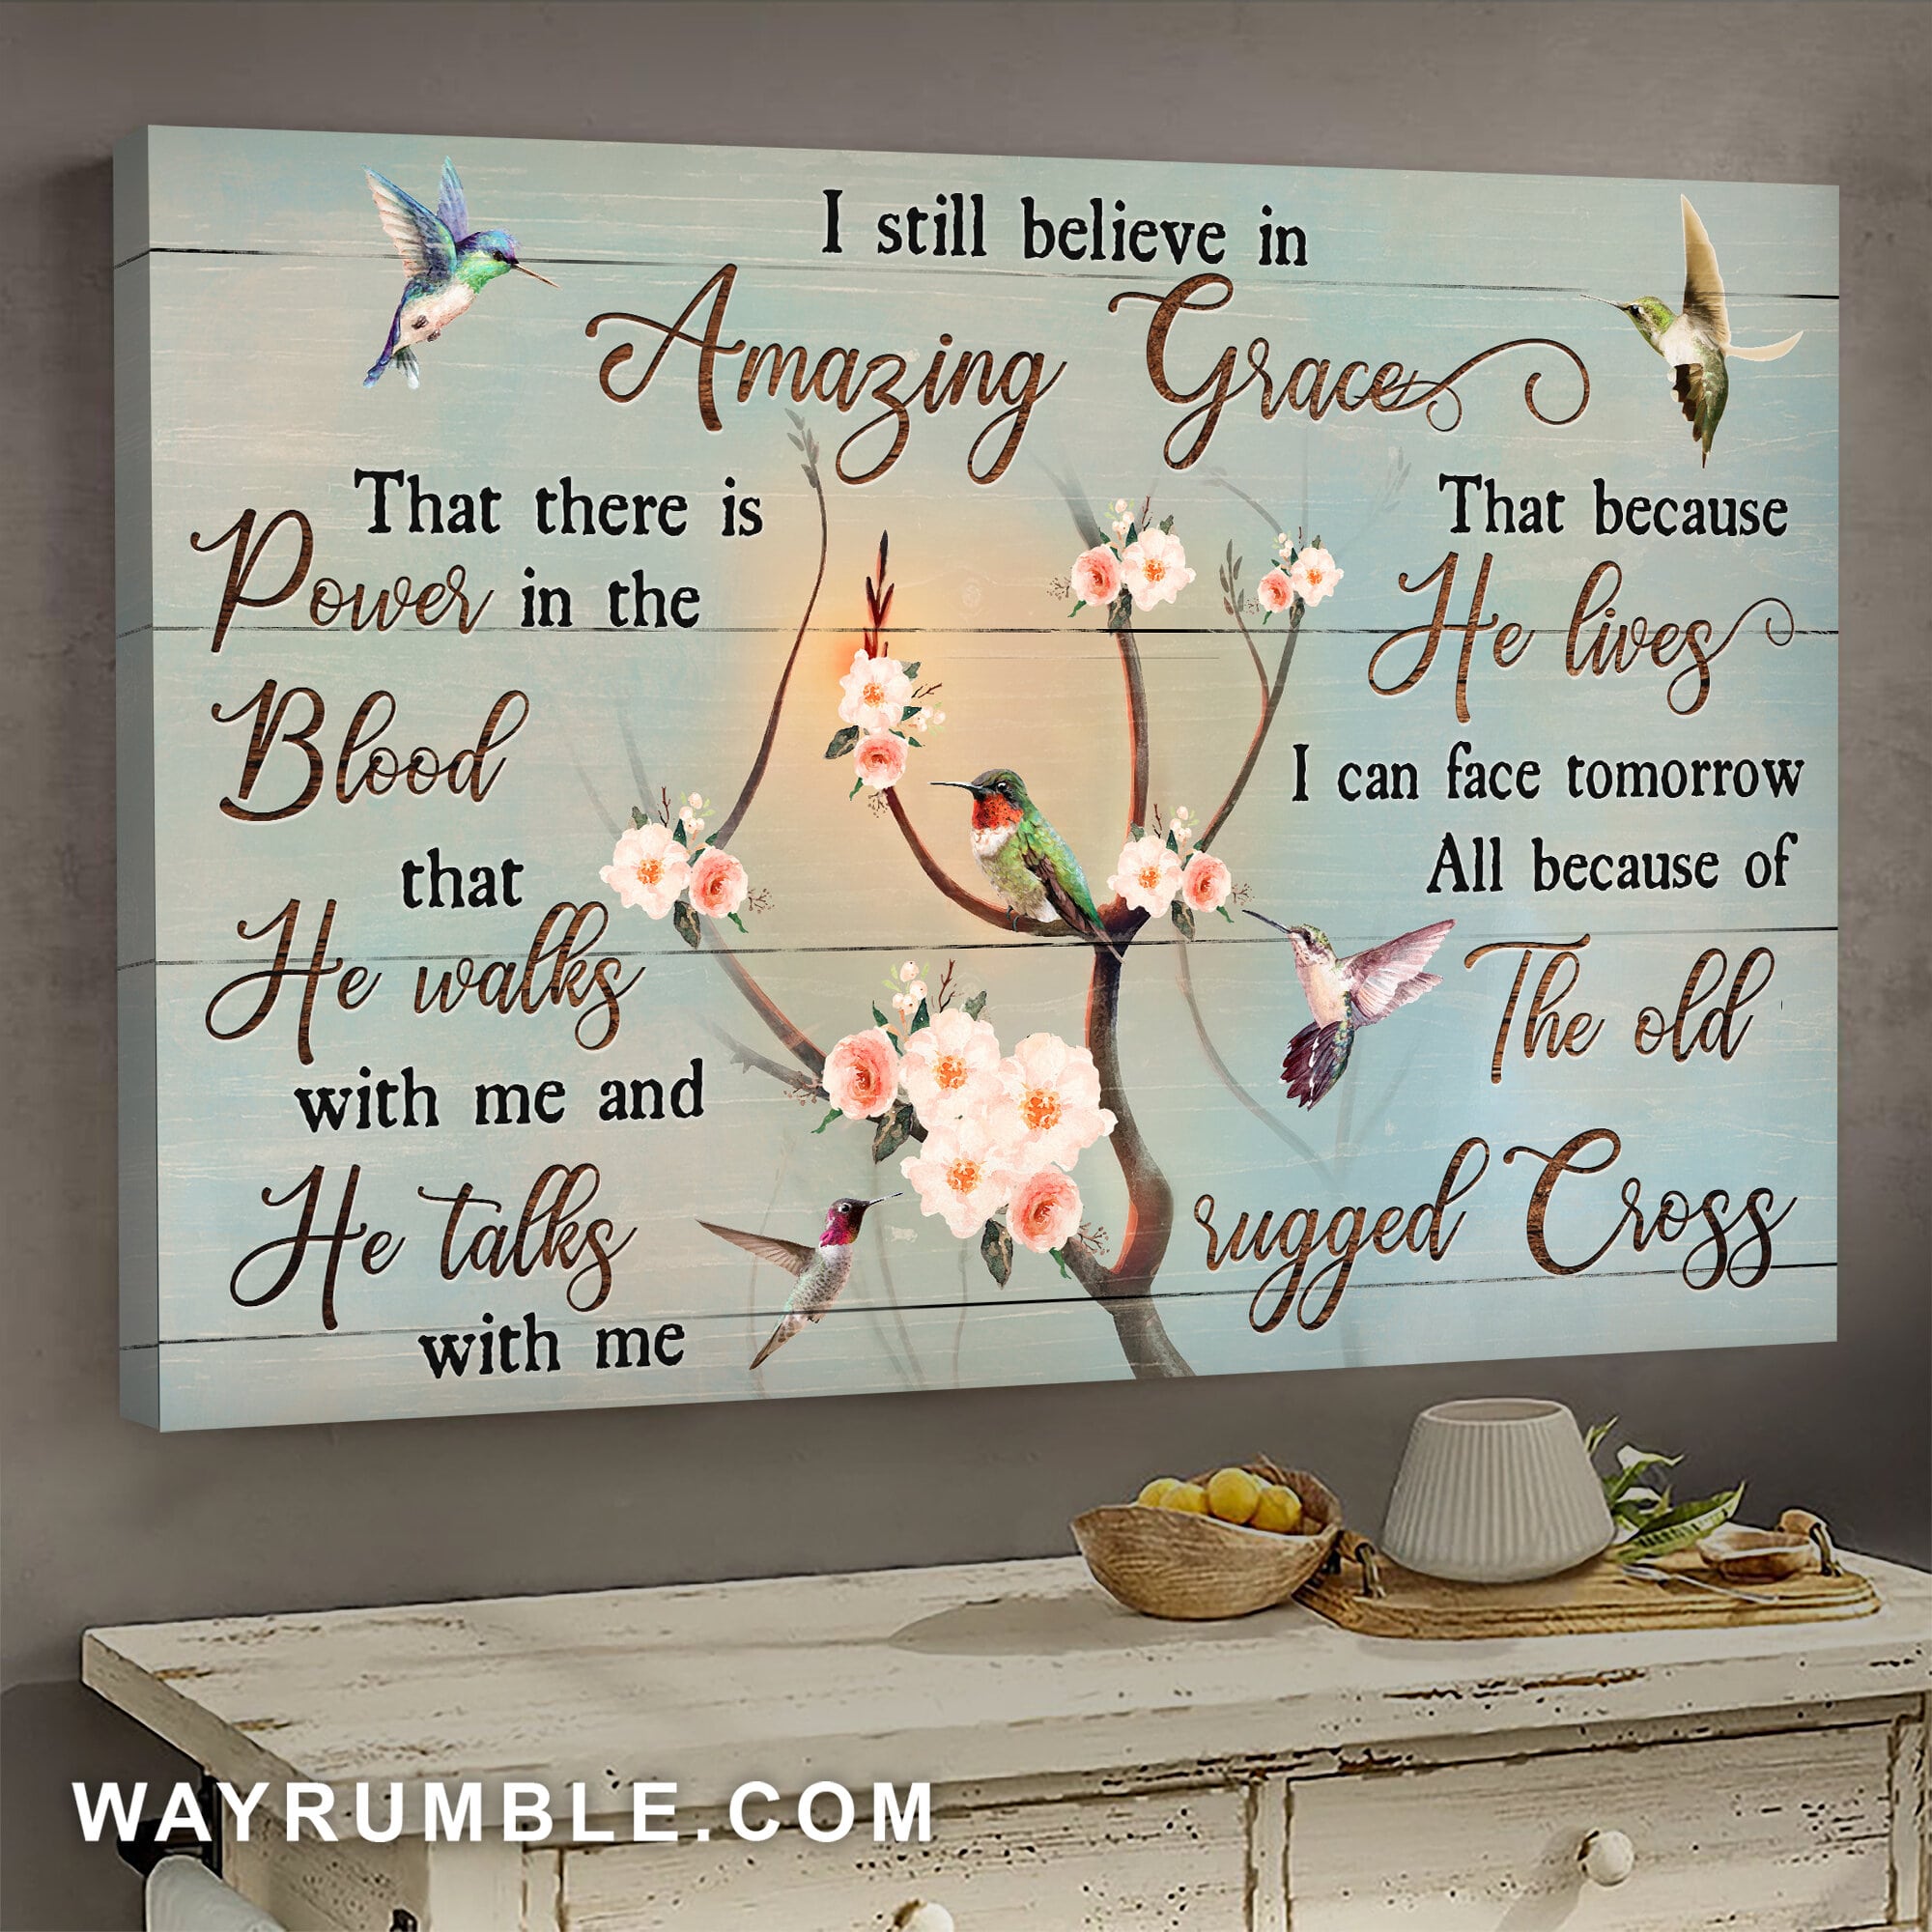 Jesus, Apricot blossom, Hummingbird - I still believe in amazing grace Landscape Canvas Prints, Wall Art